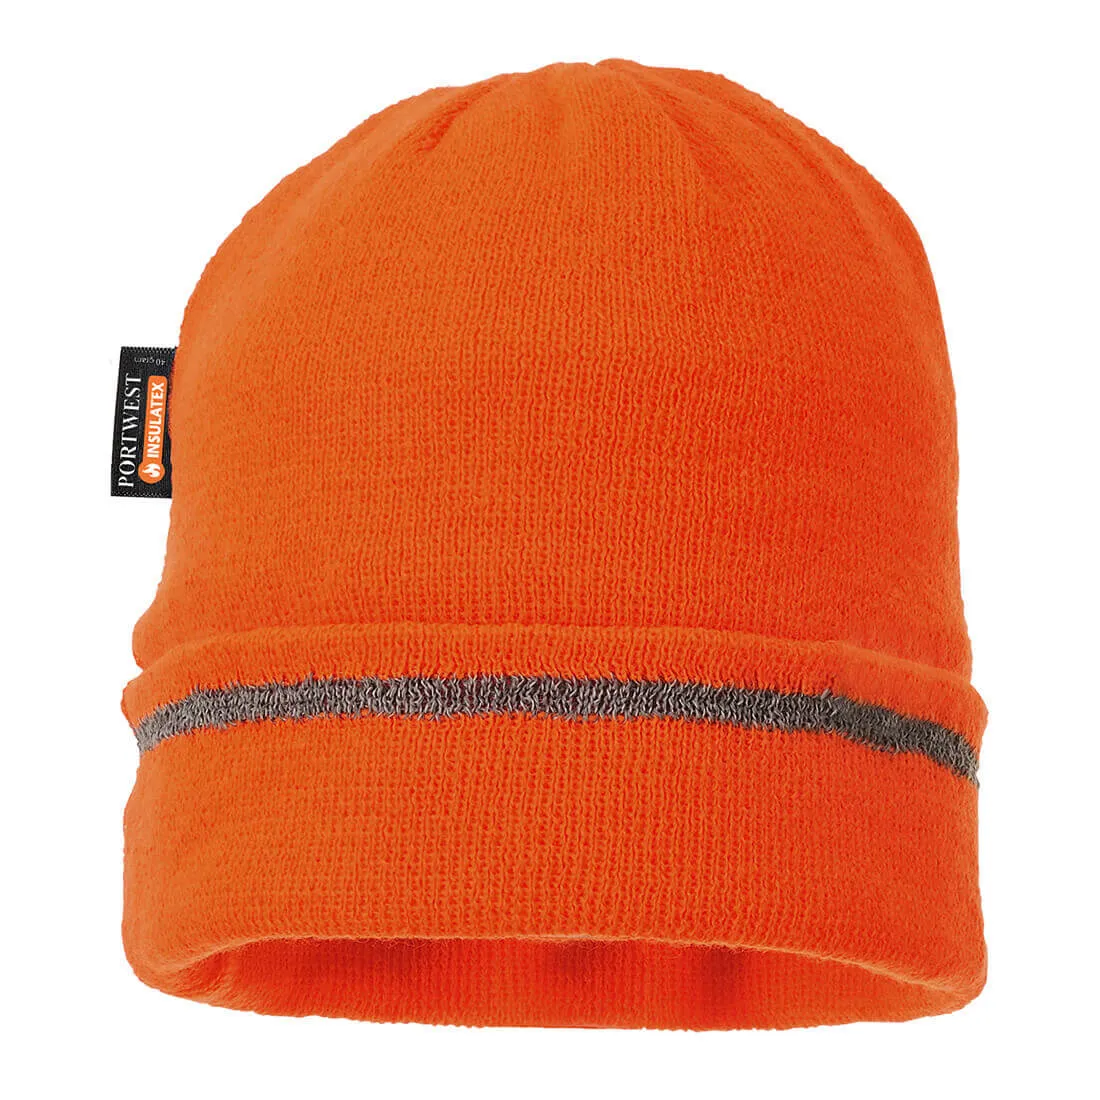 Portwest Reflective Trim Knit Hat - Orange, One Size